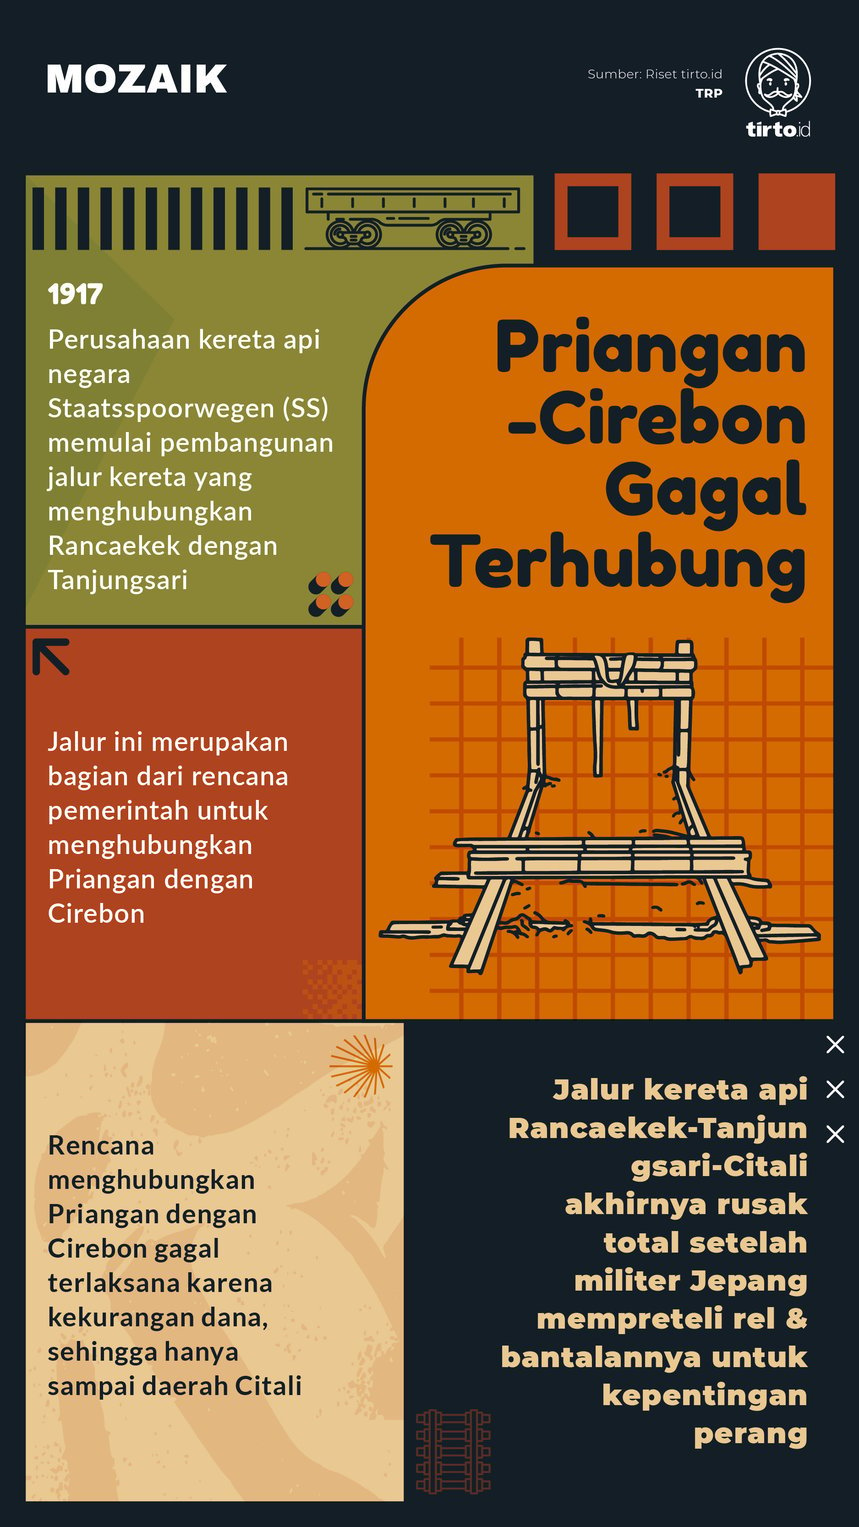 Infografik Mozaik Priangan-Cirebon gagal terhubung